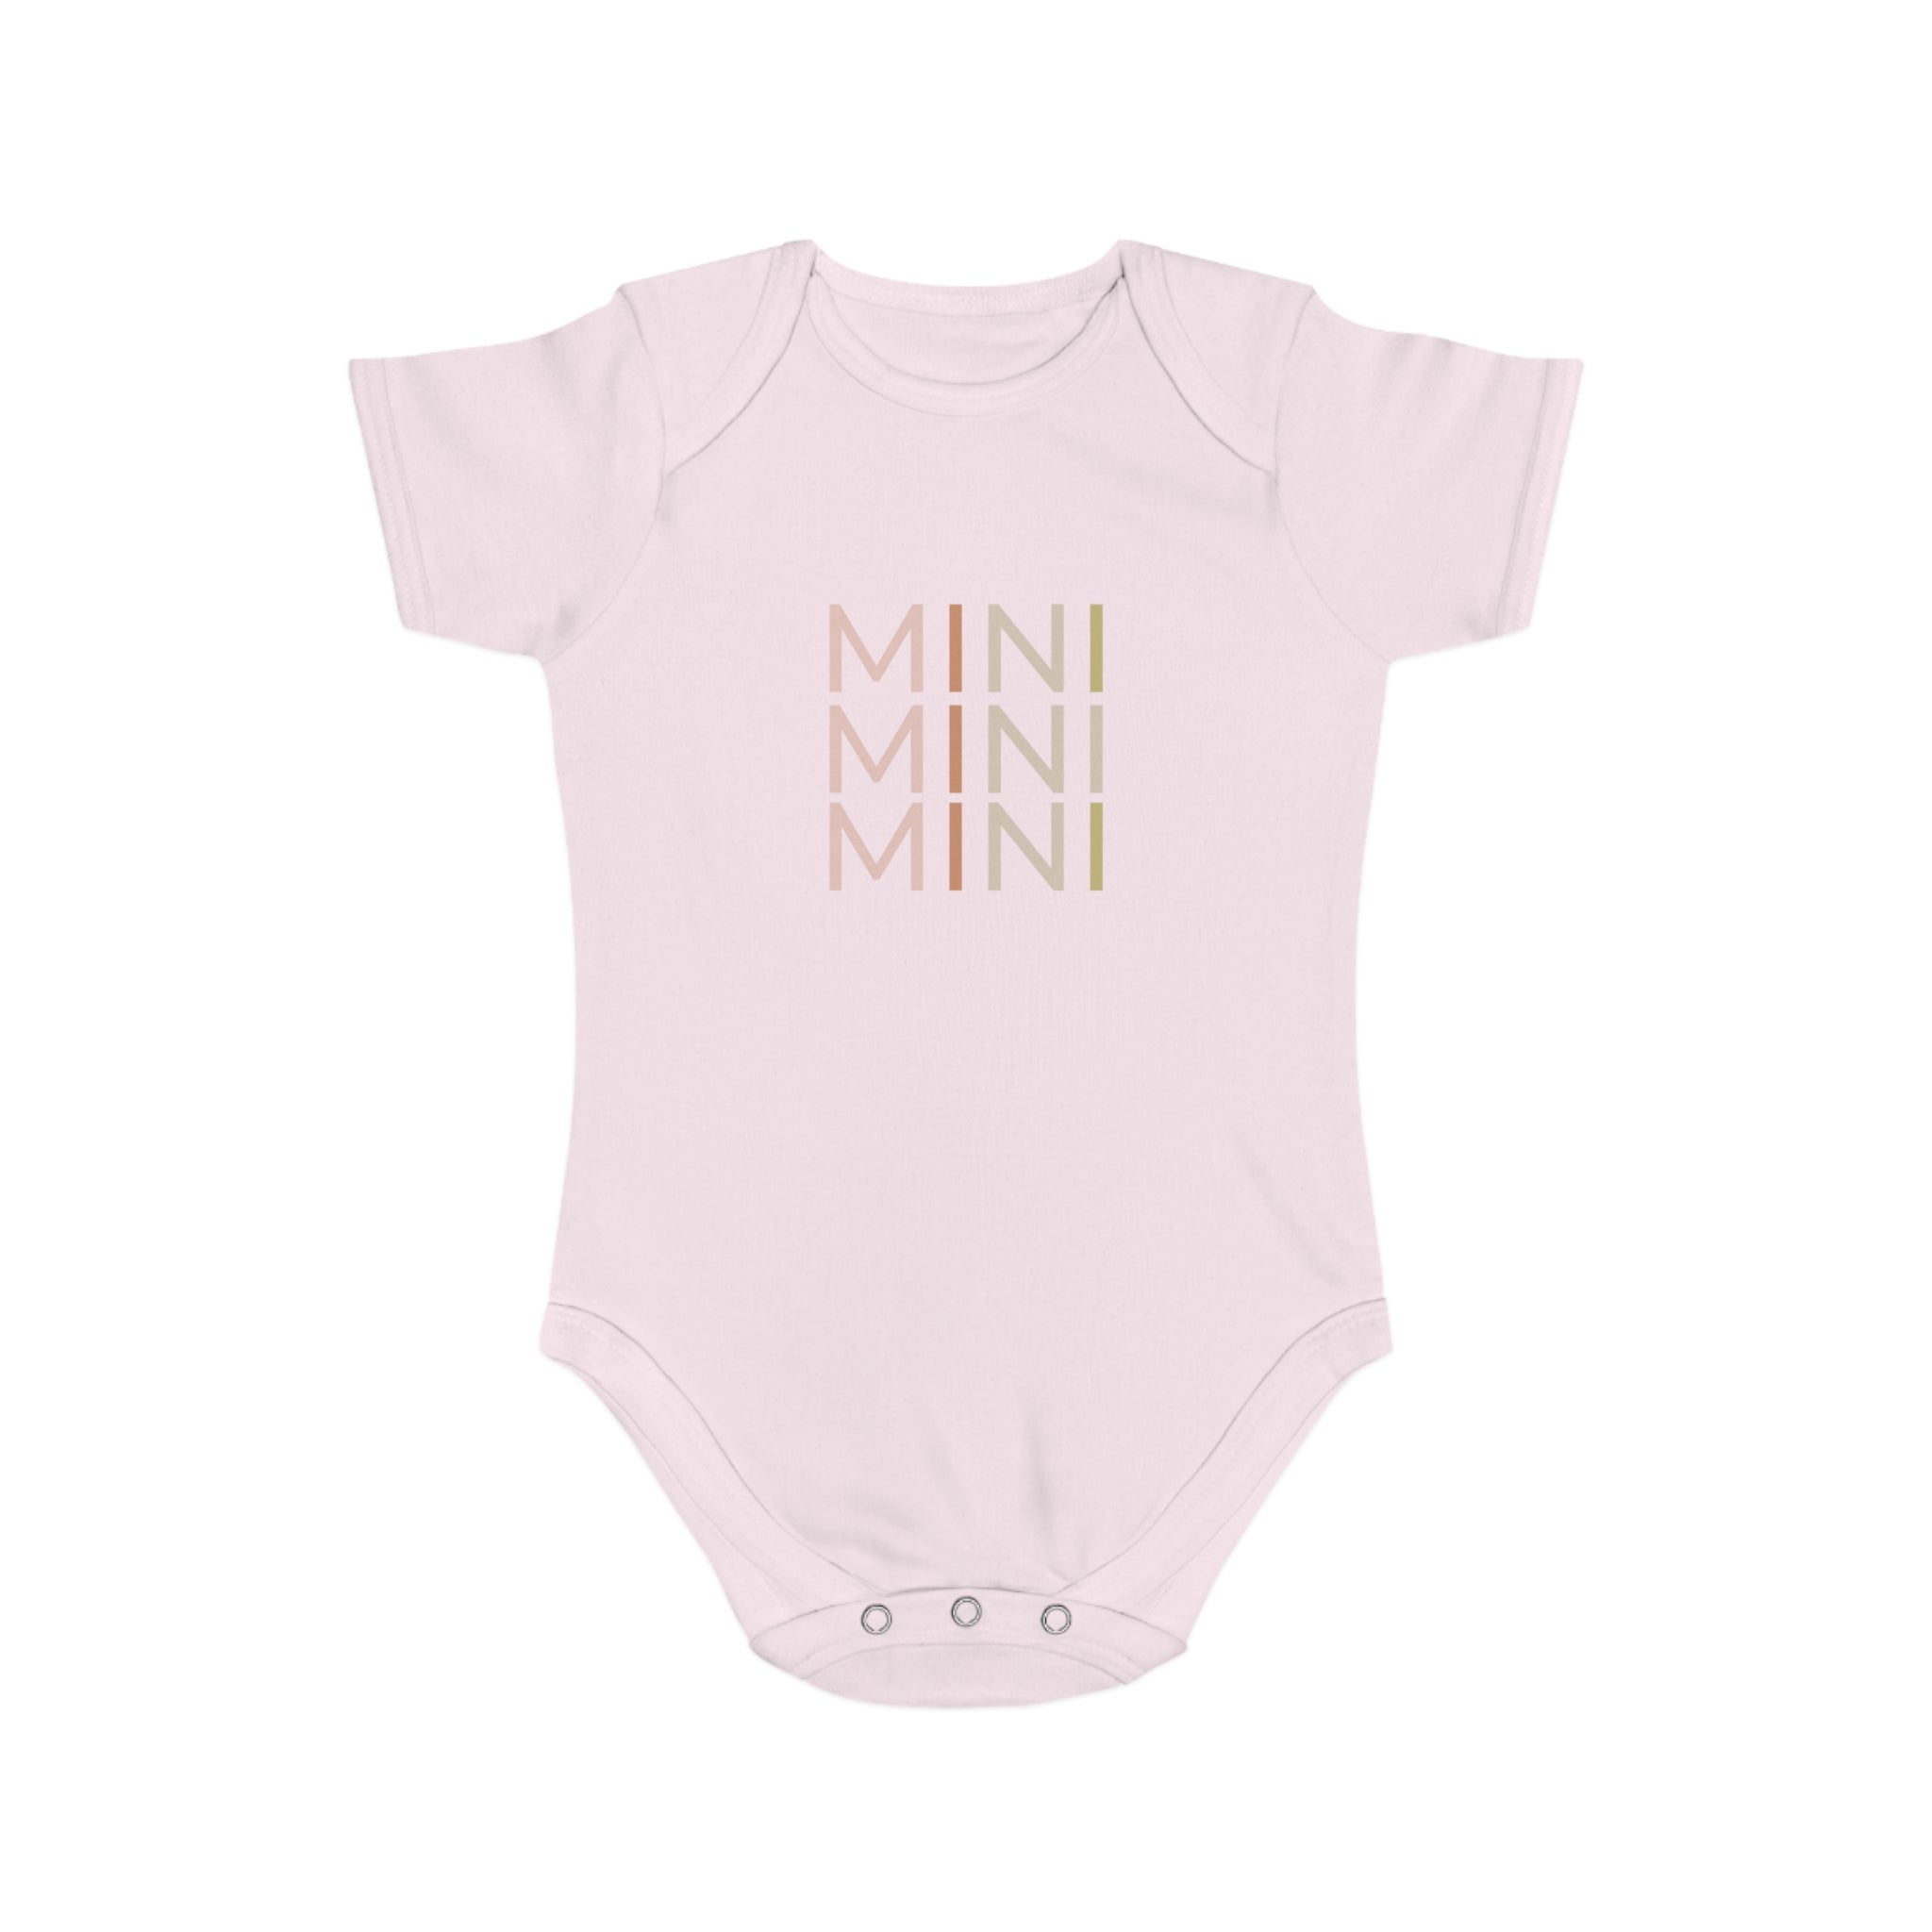 Cute baby onesie with mini print